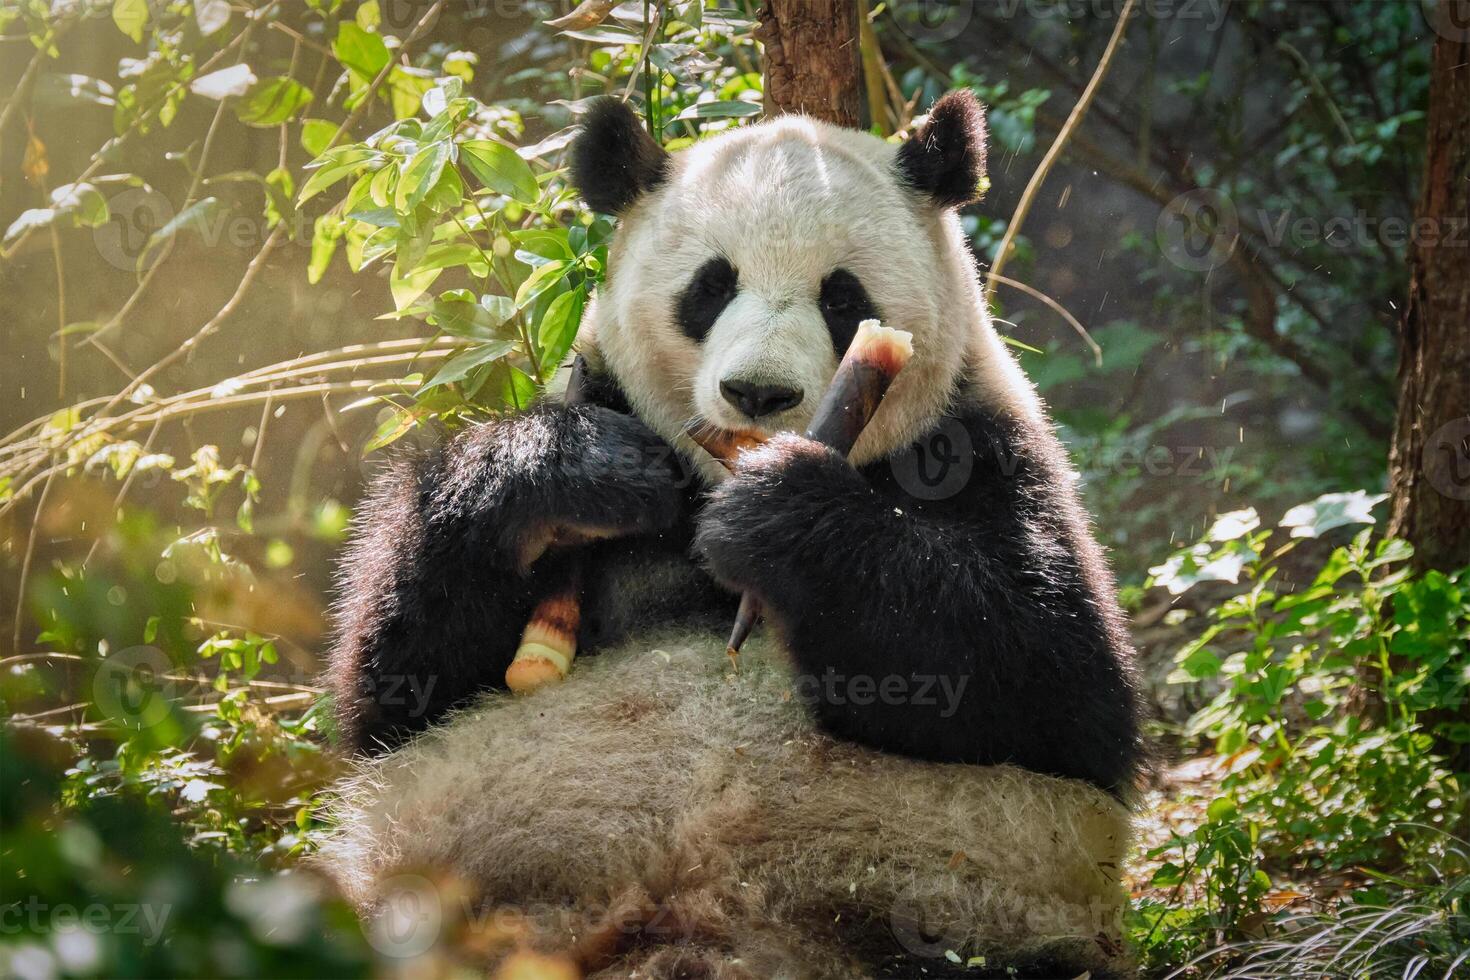 Giant panda bear in China photo